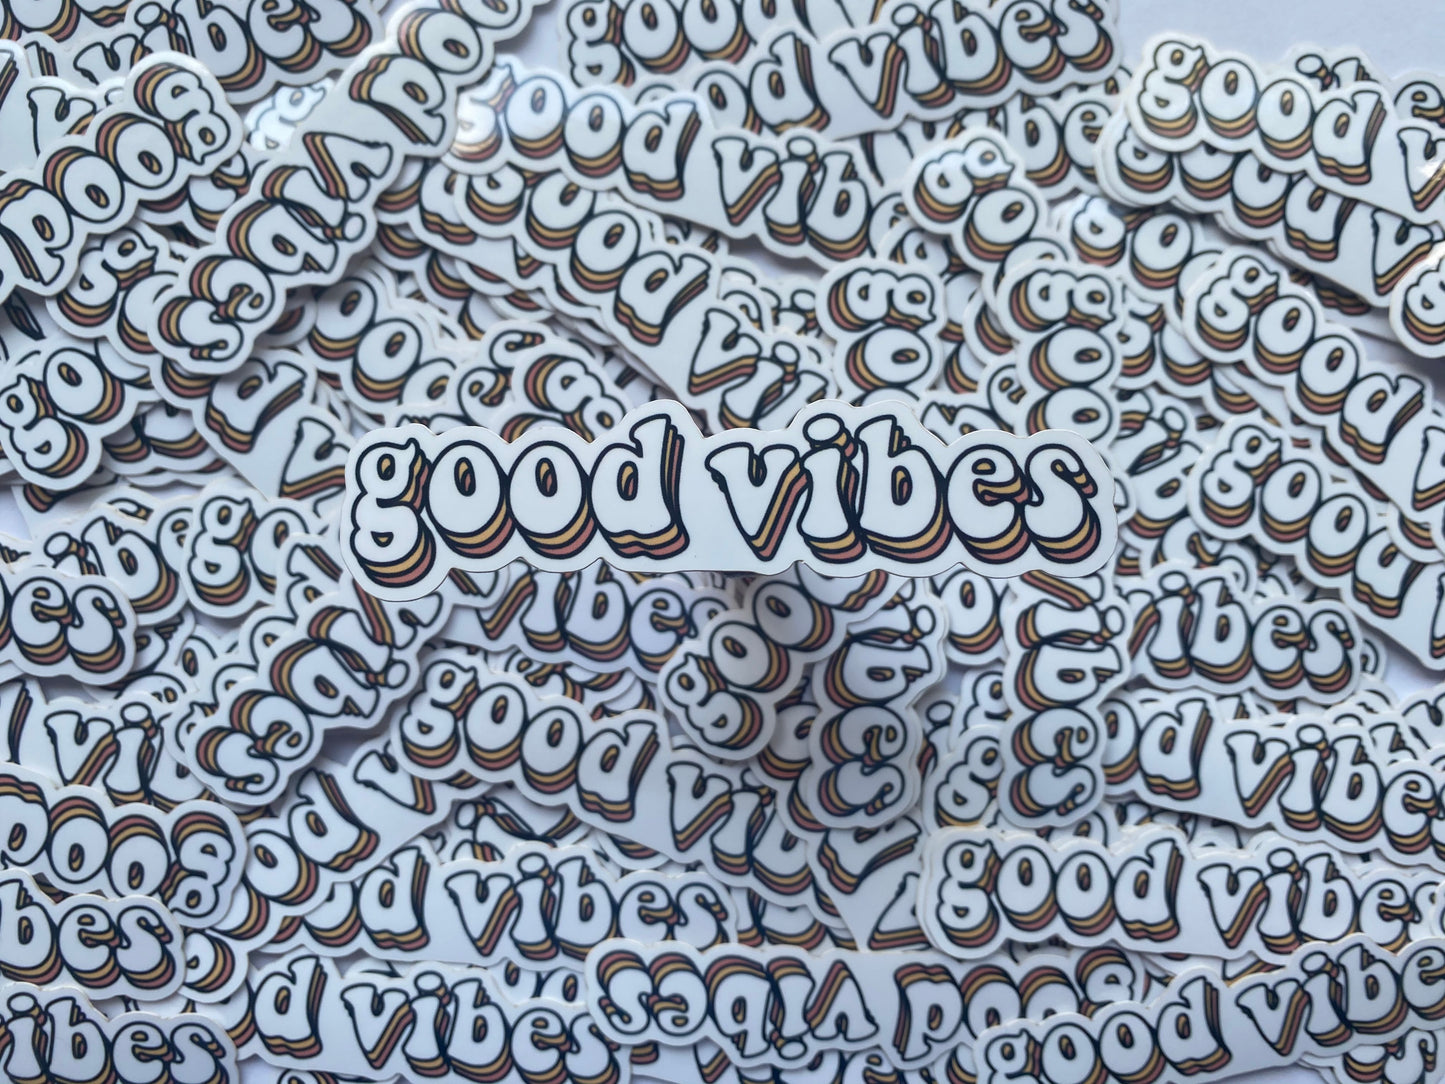 good vibes sticker